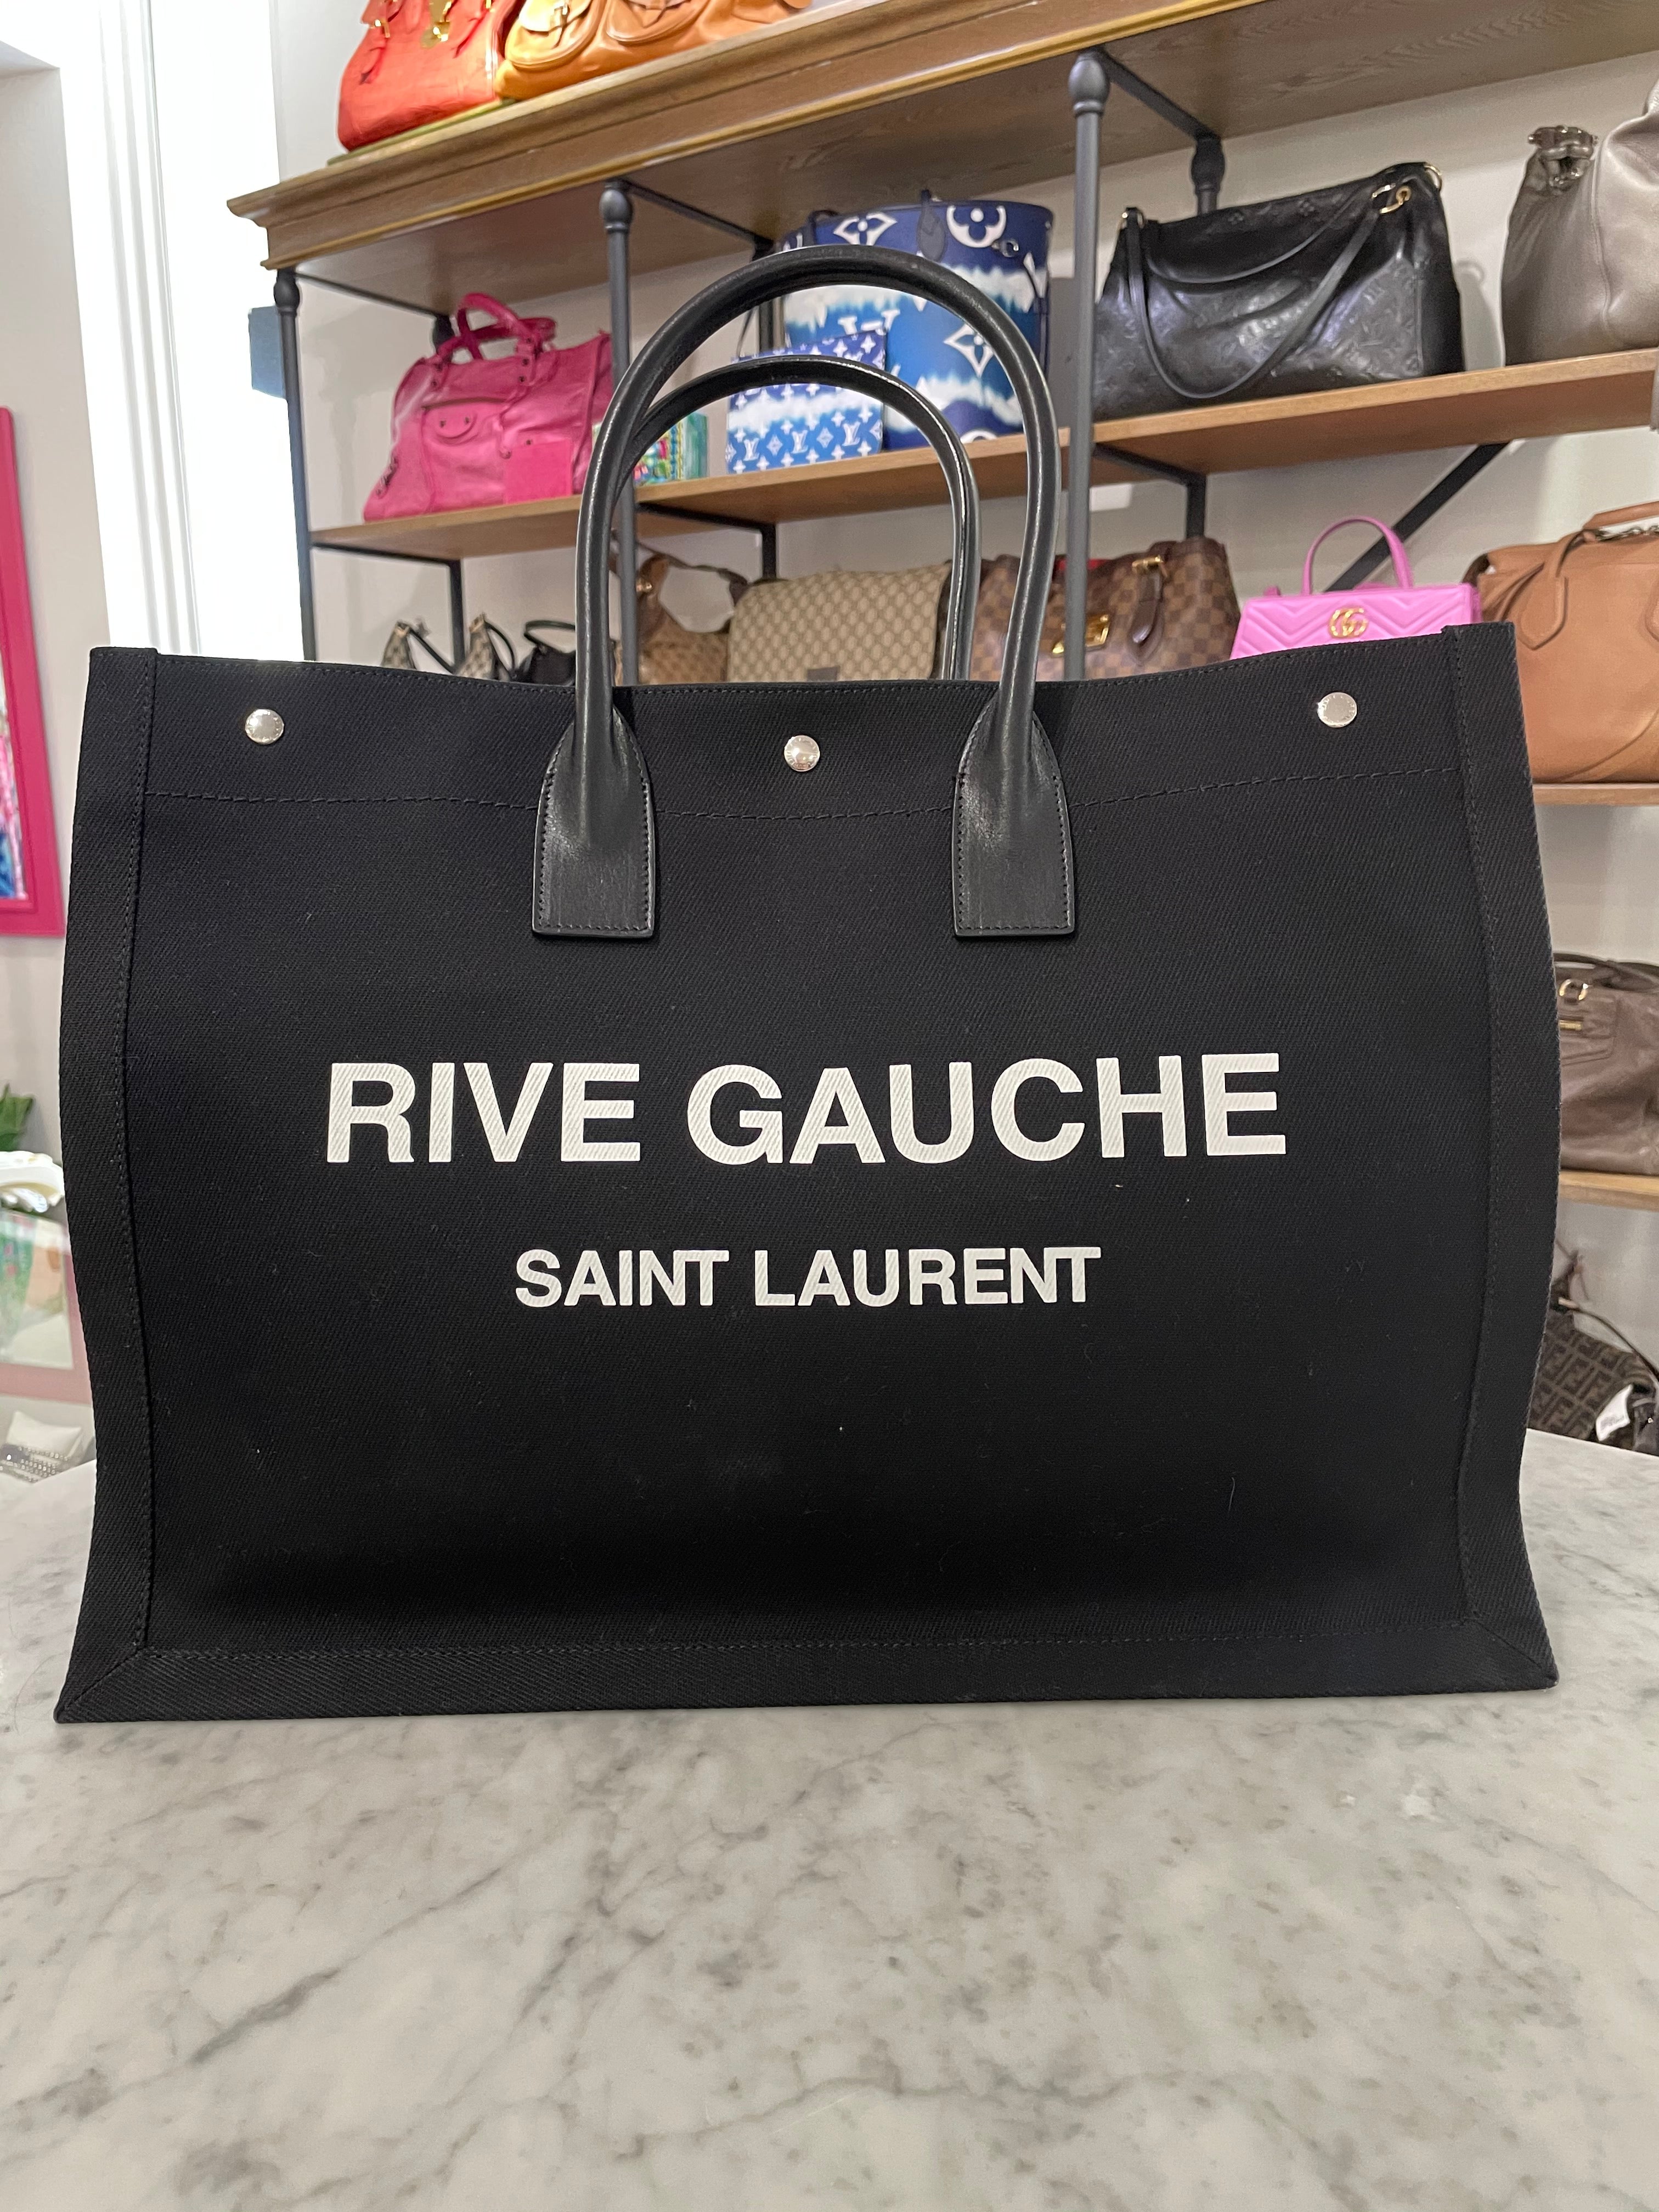 Logo Leather Tote Bag in Black - Saint Laurent